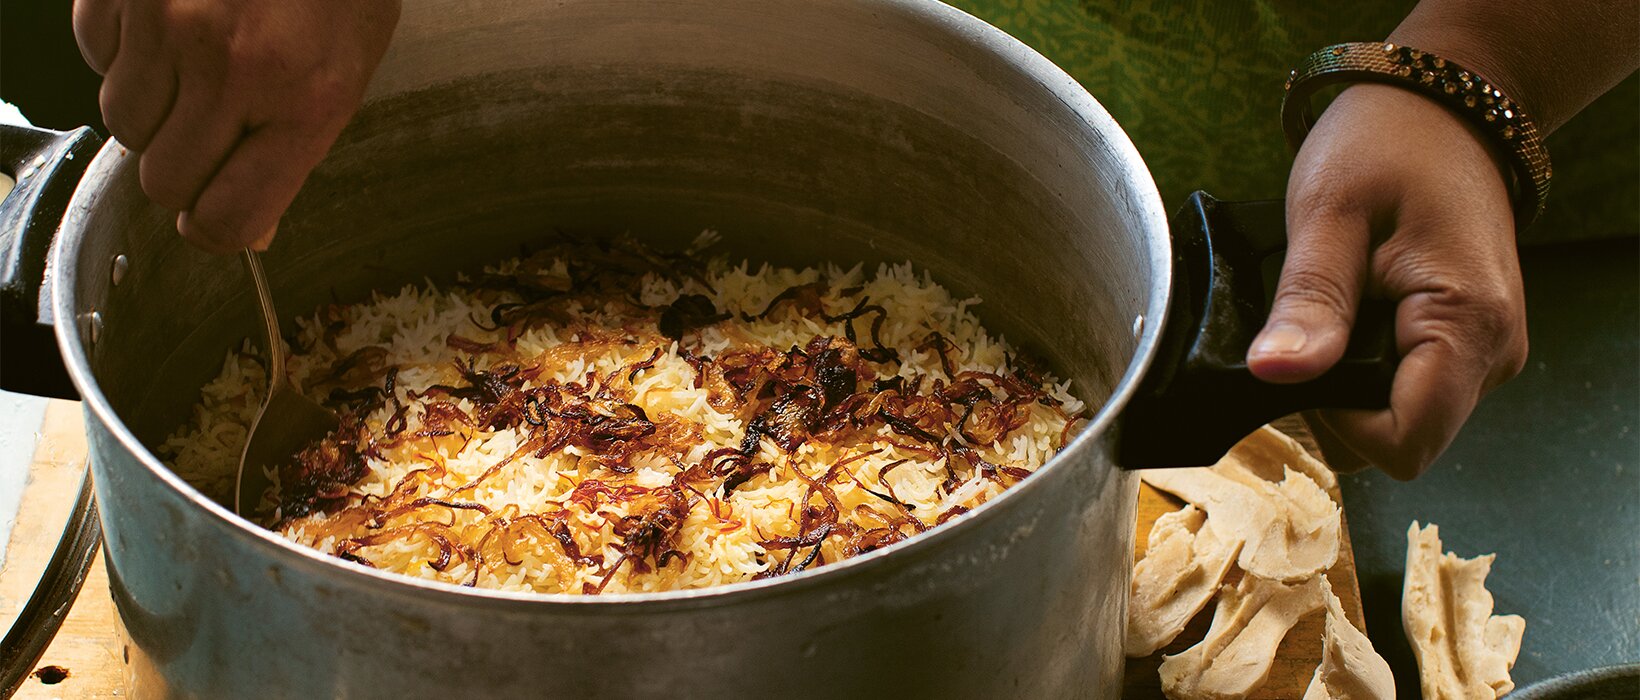 Recipe of the week: Ammu's chicken biryani by Asma Khan